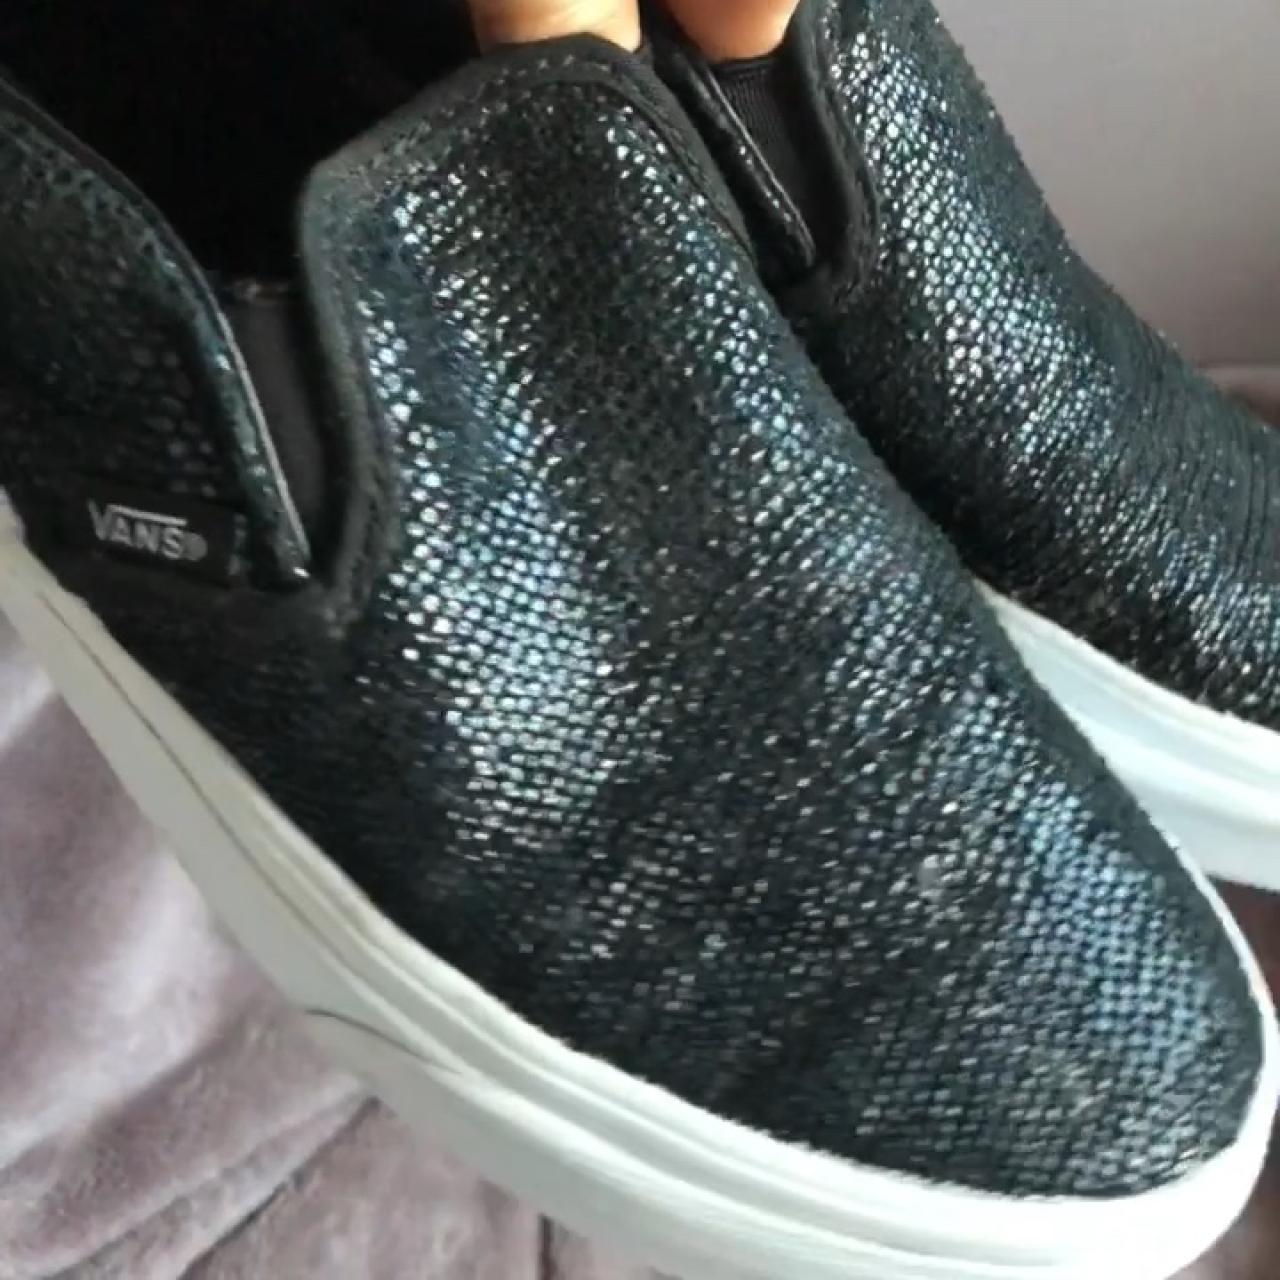 black sparkly slip on shoes